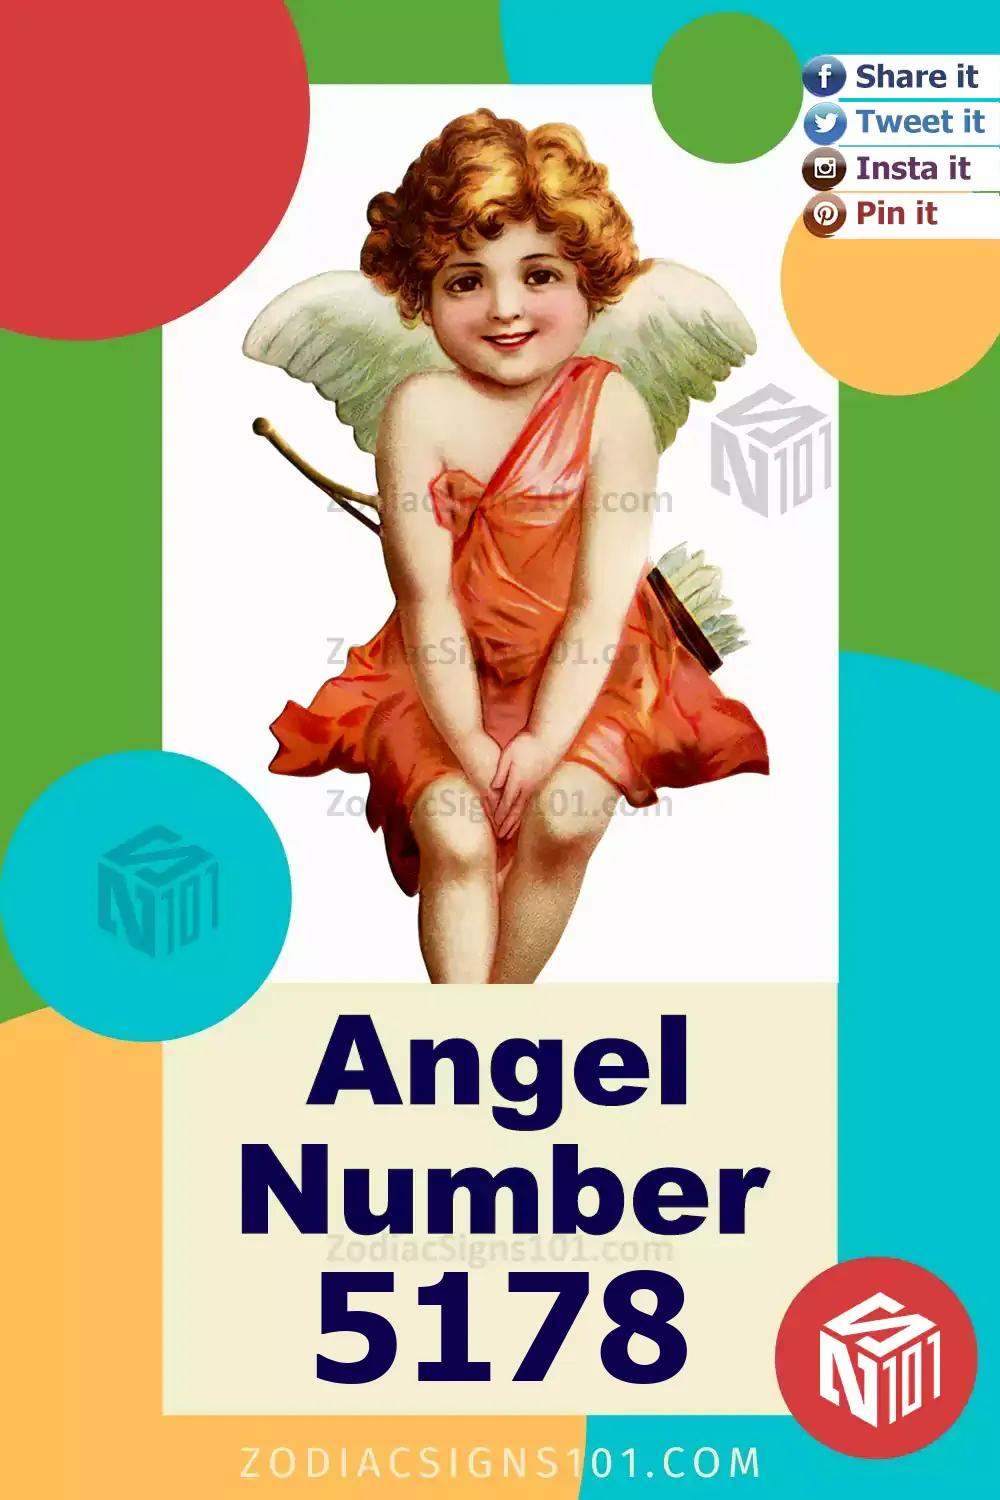 5178-Angel-Number-Meaning.jpg